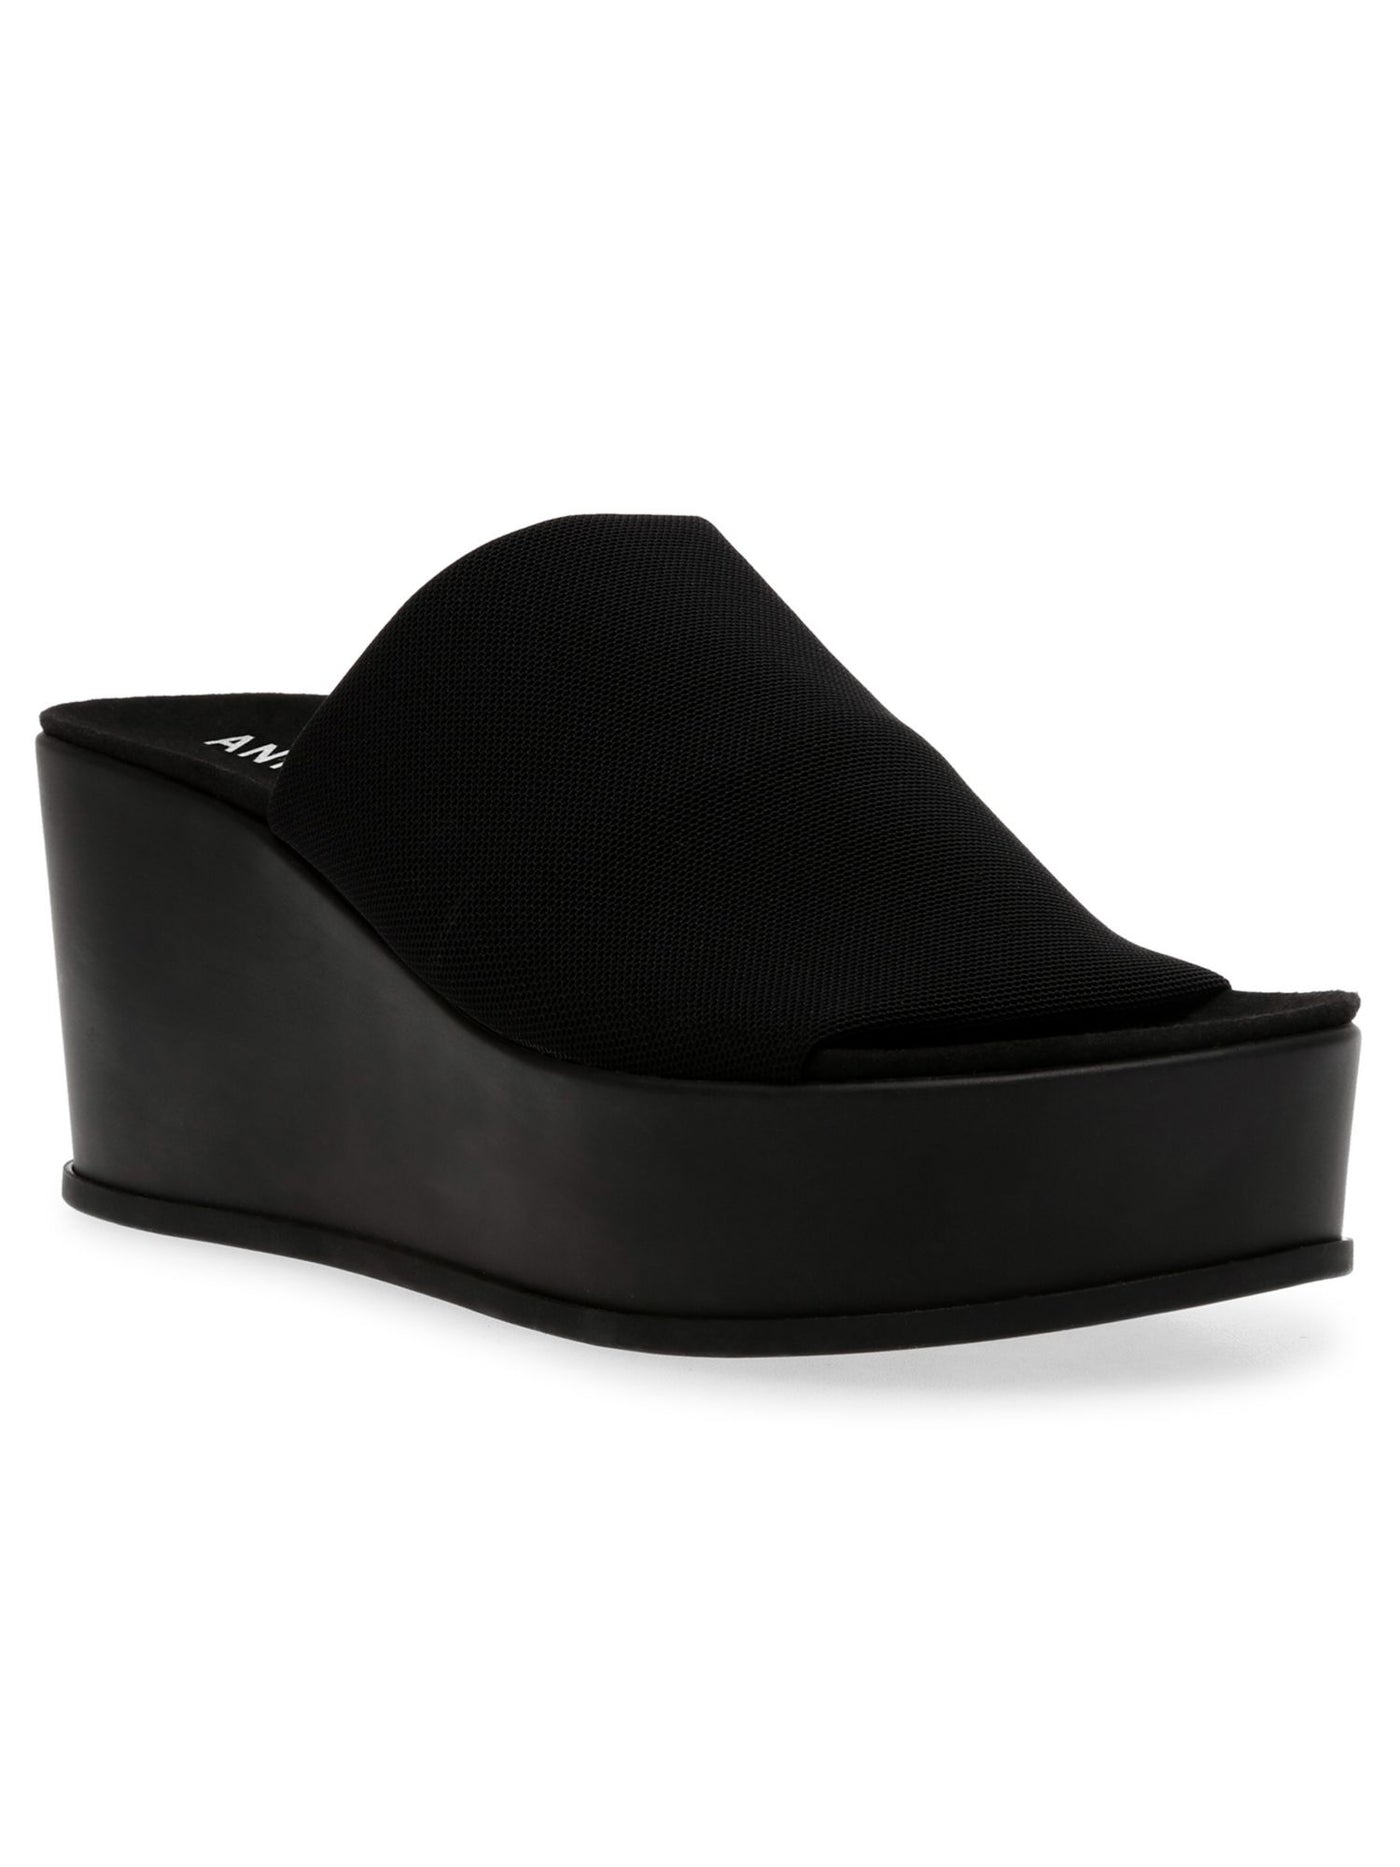 ANNE KLEIN Womens Black Padded Stretch Venti Round Toe Platform Slip On Slide Sandals Shoes 9.5 M